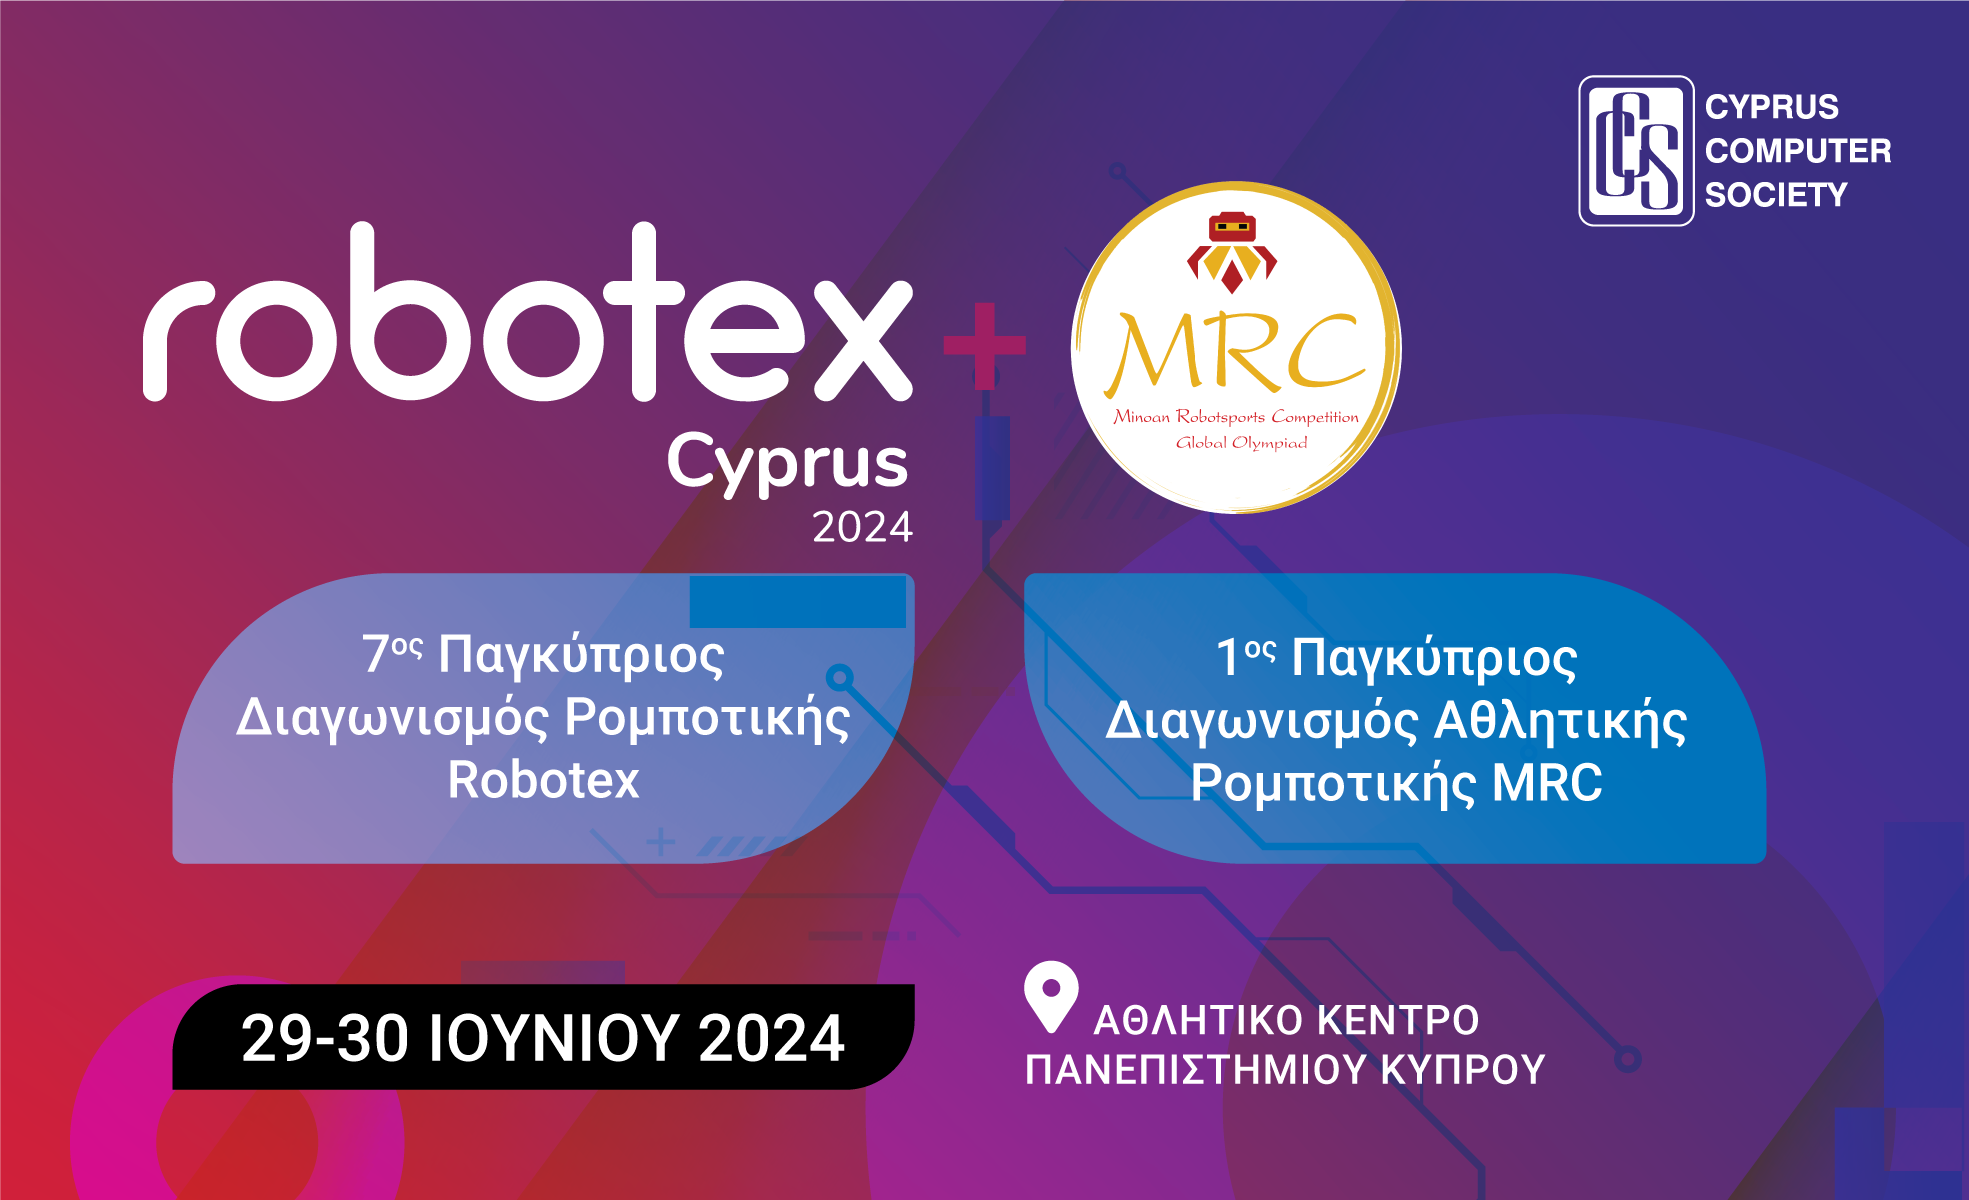 Robotex & MRC 2024: Για πρώτη φορά στην Κύπρο αγώνες αθλητικής ρομποτικής